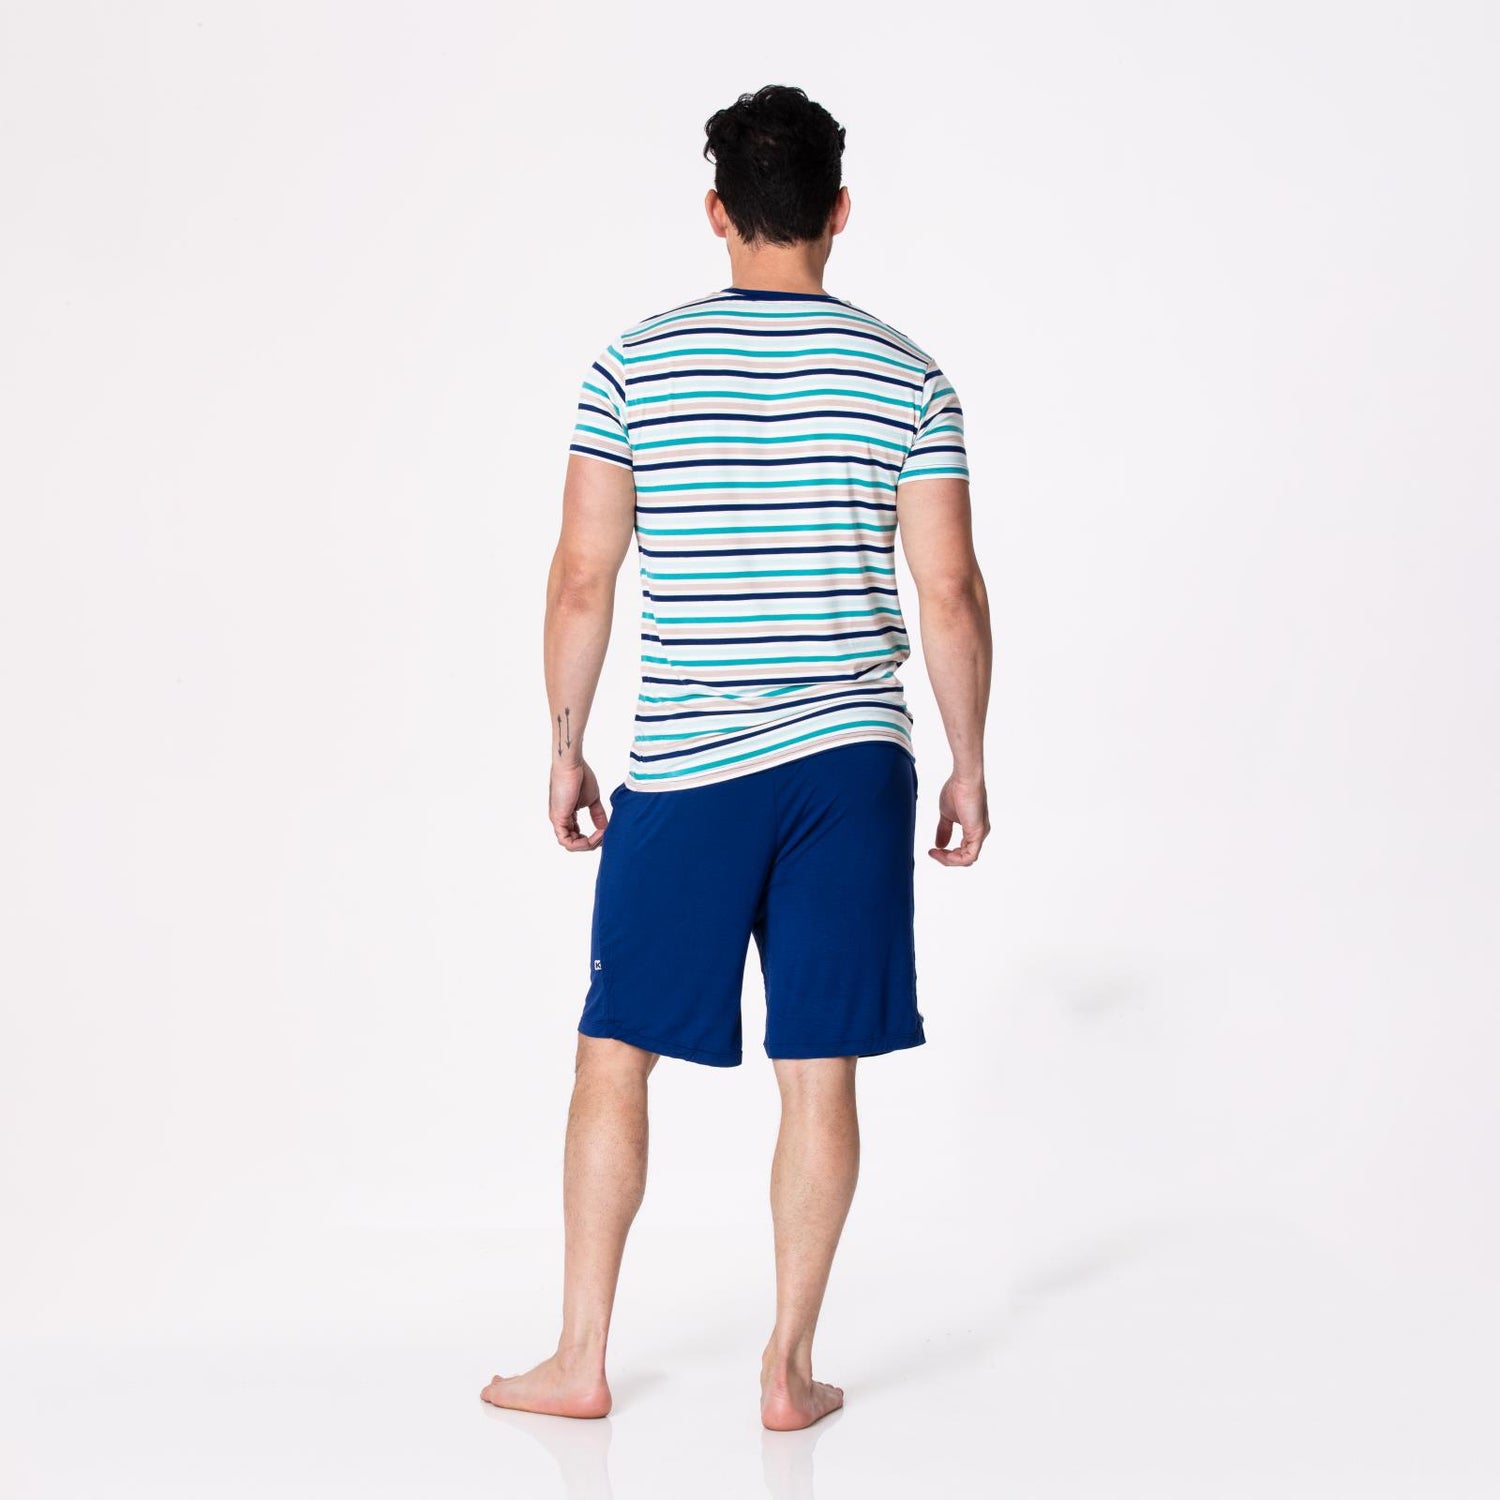 Men's Lounge Shorts in Flag Blue